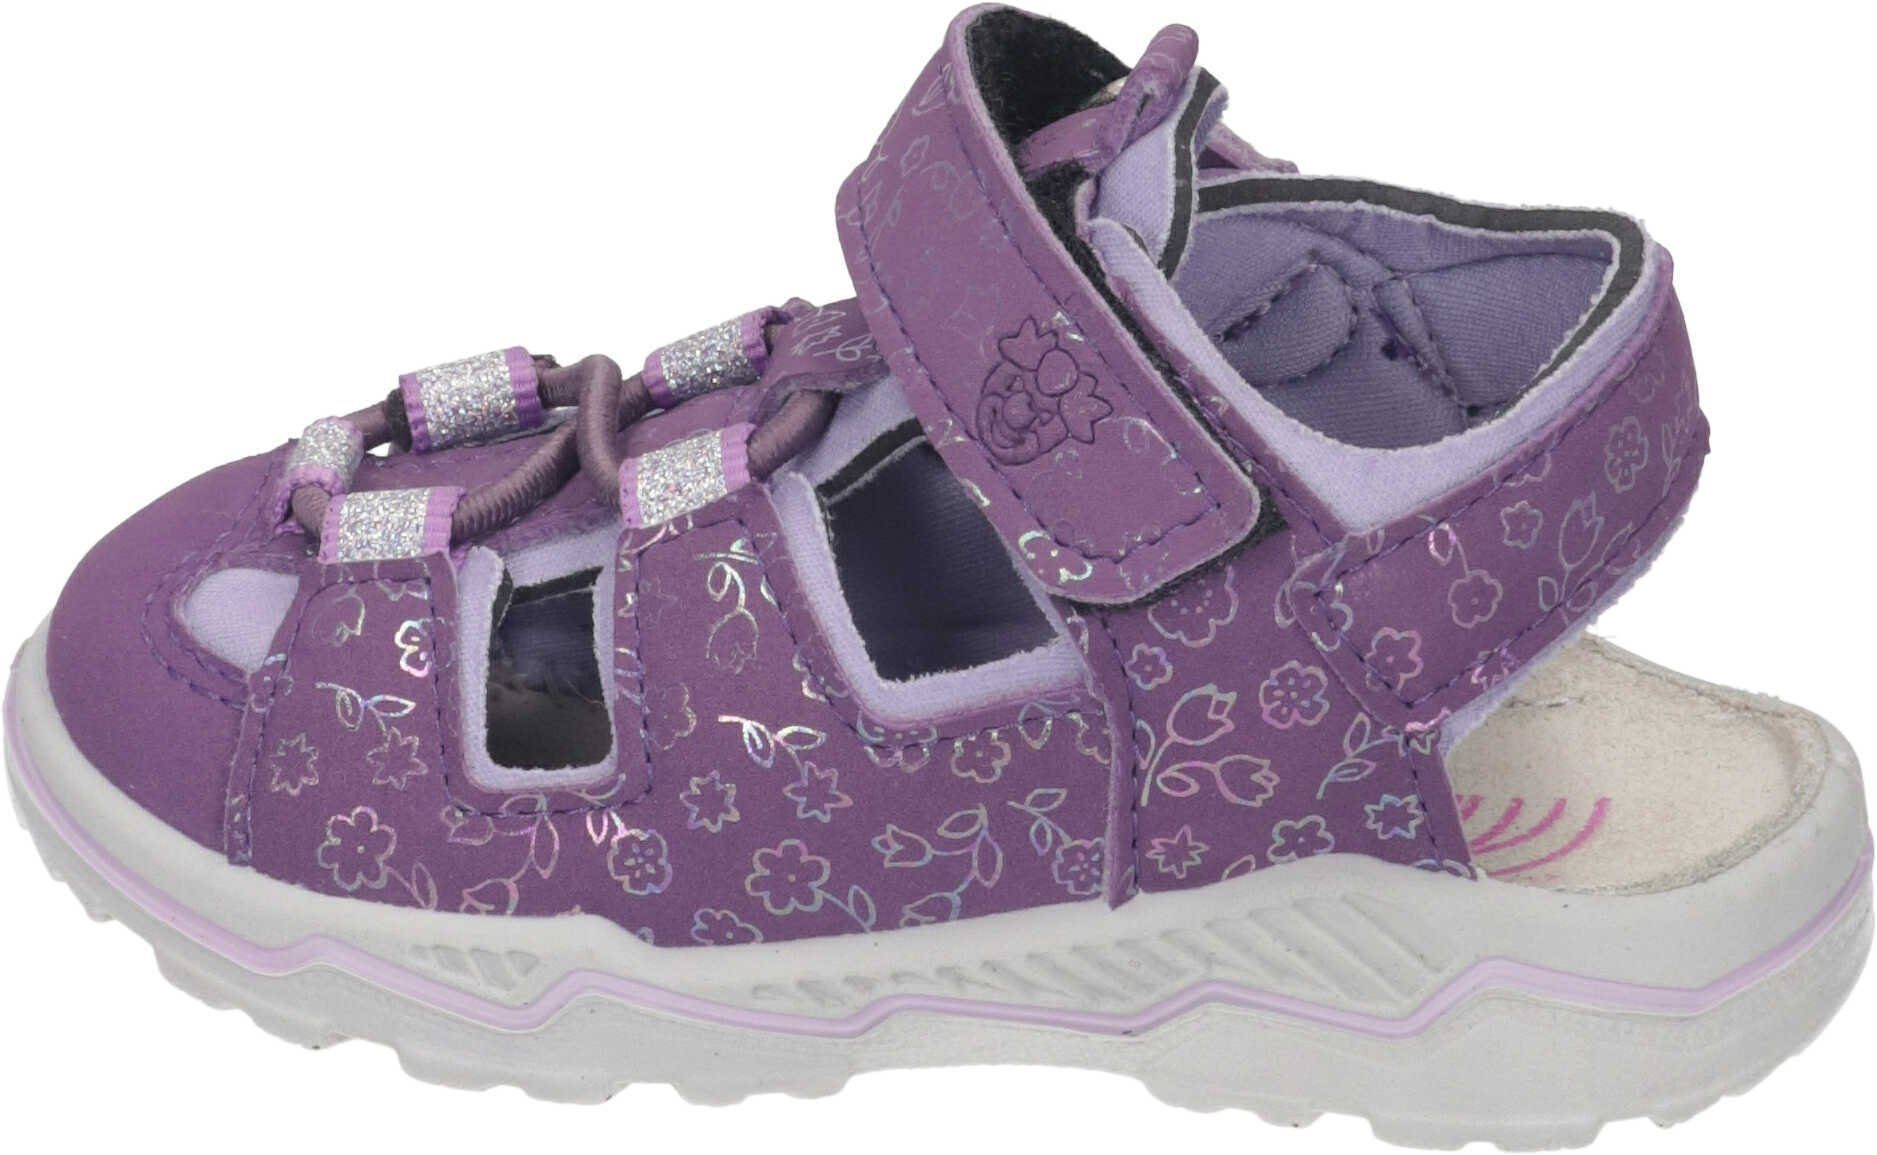 Pepino Sandaletten Outdoorsandale Synthetik/Textil aus Cassis/Lavendel